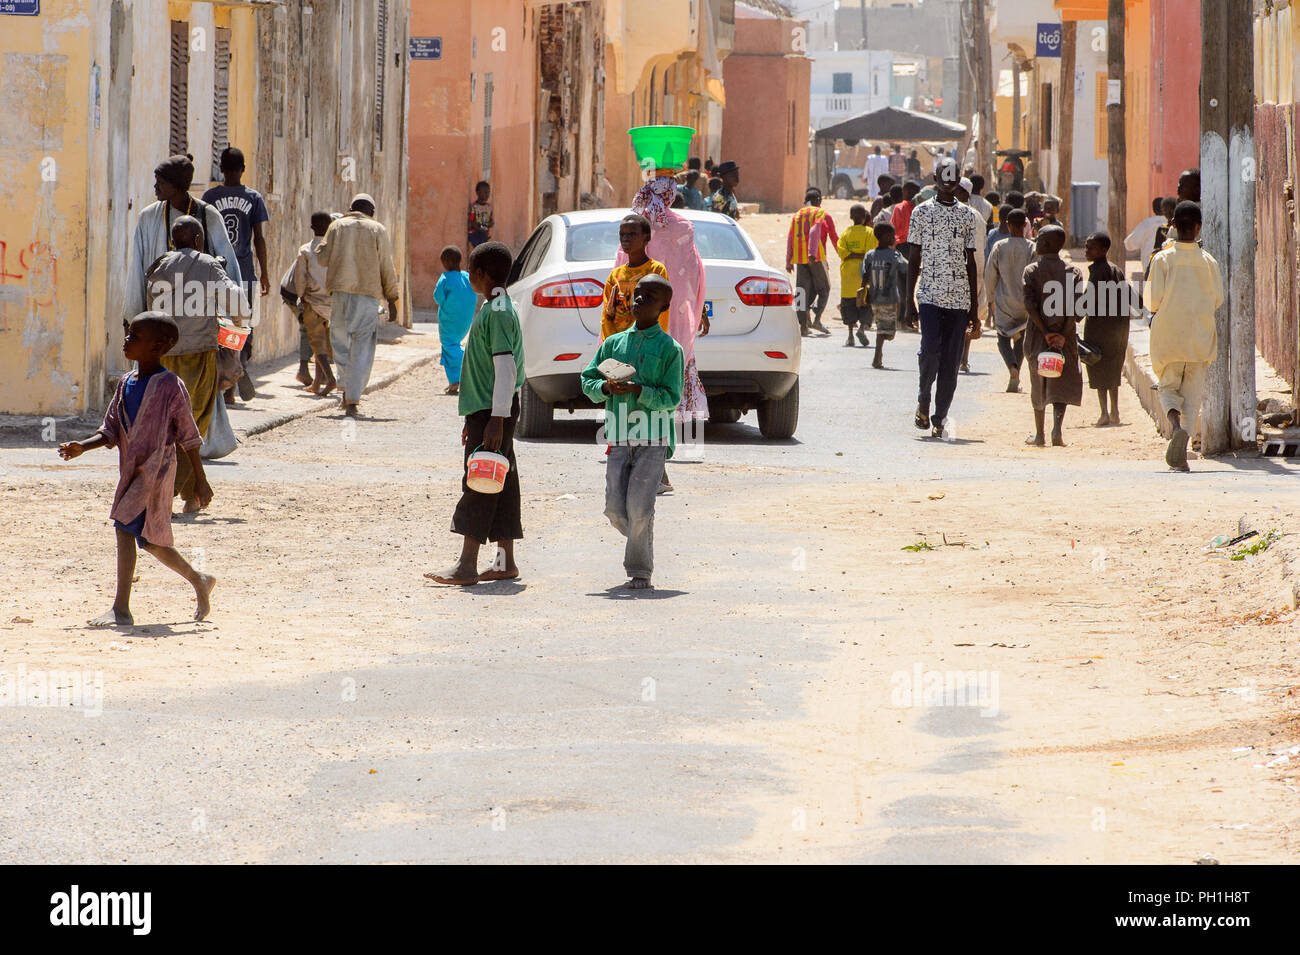 SAINT LOUIS, SENEGAL - APR 24, 2017: Unidentified Senegalese people walk along the road between buildings in Saint Louis, one of the biggest cities in Stock Photo